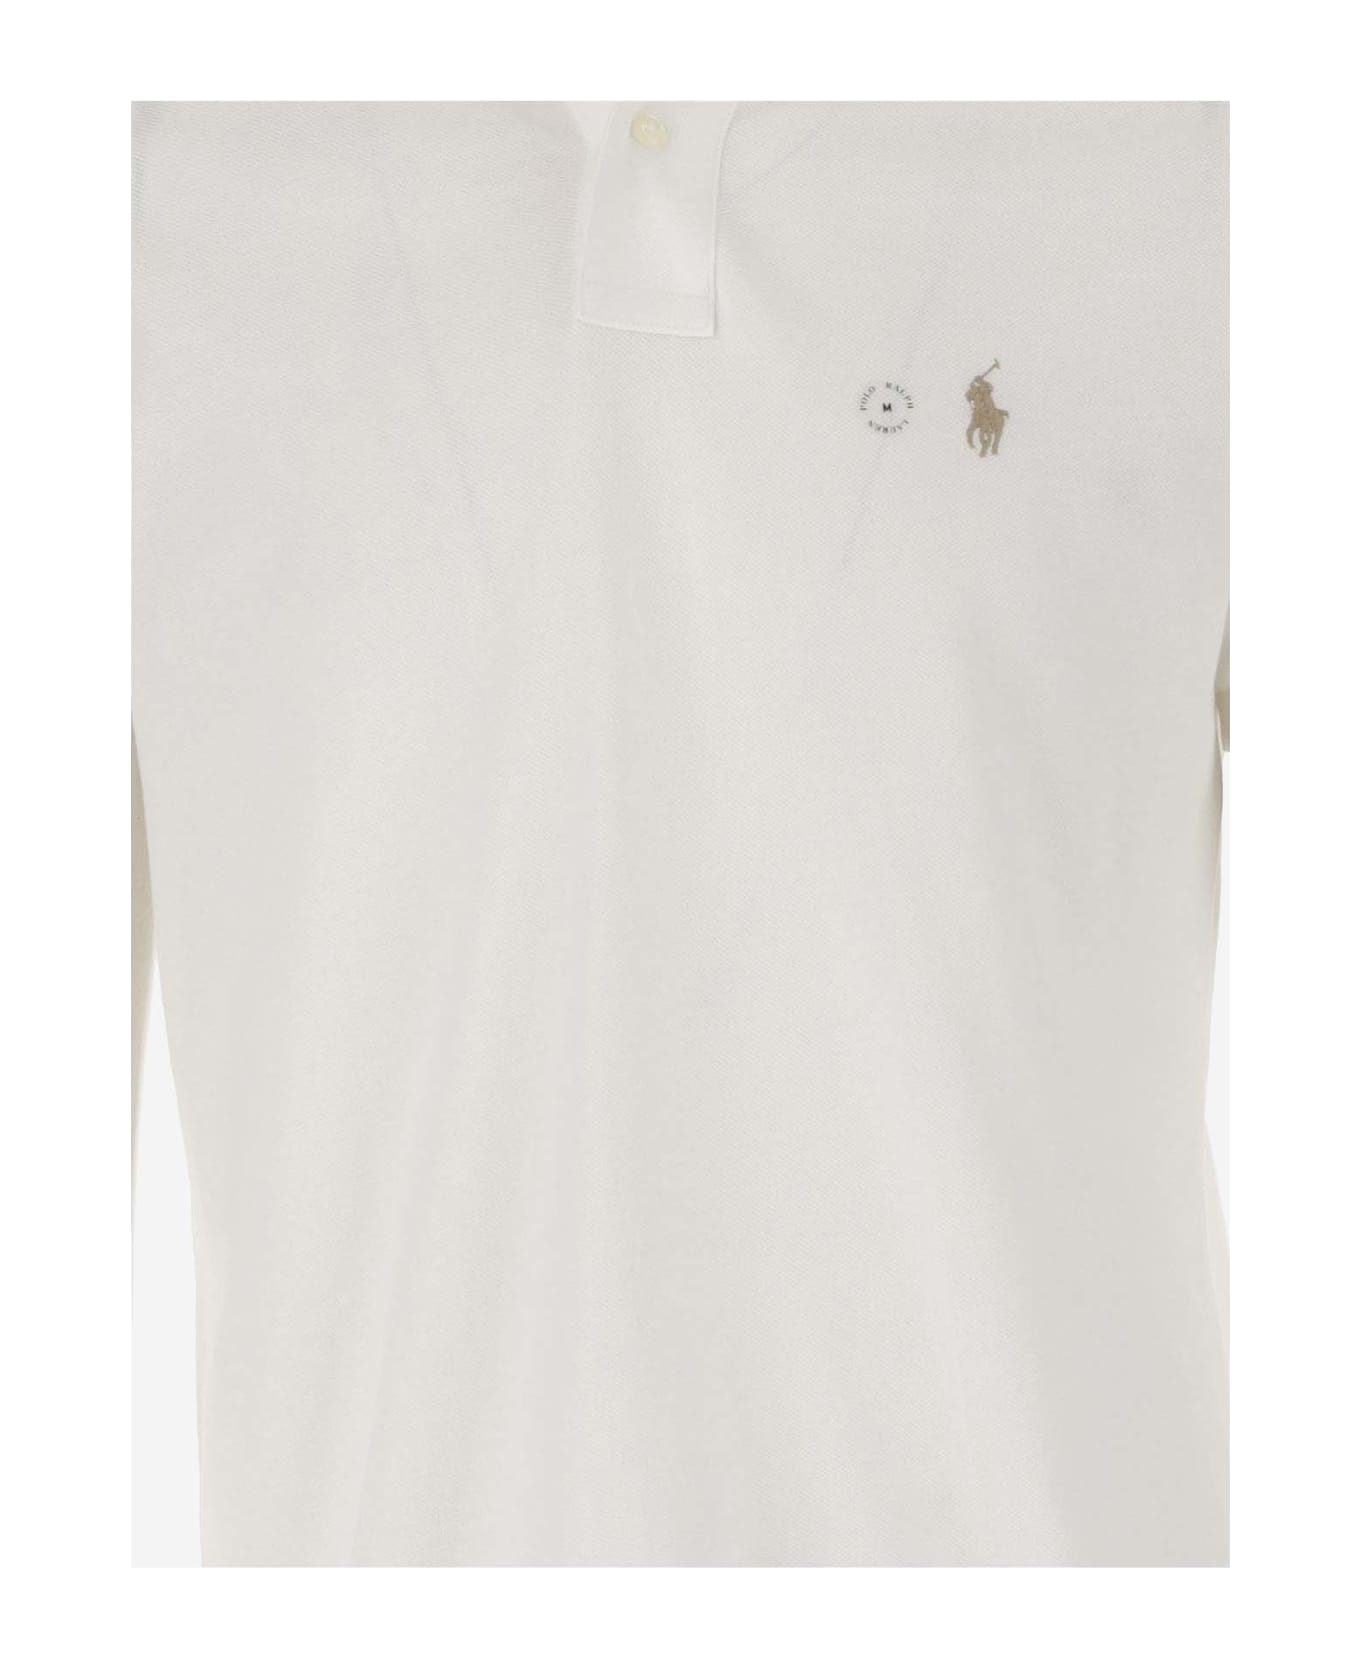 Polo Ralph Lauren Cotton Polo Shirt With Logo - White ポロシャツ